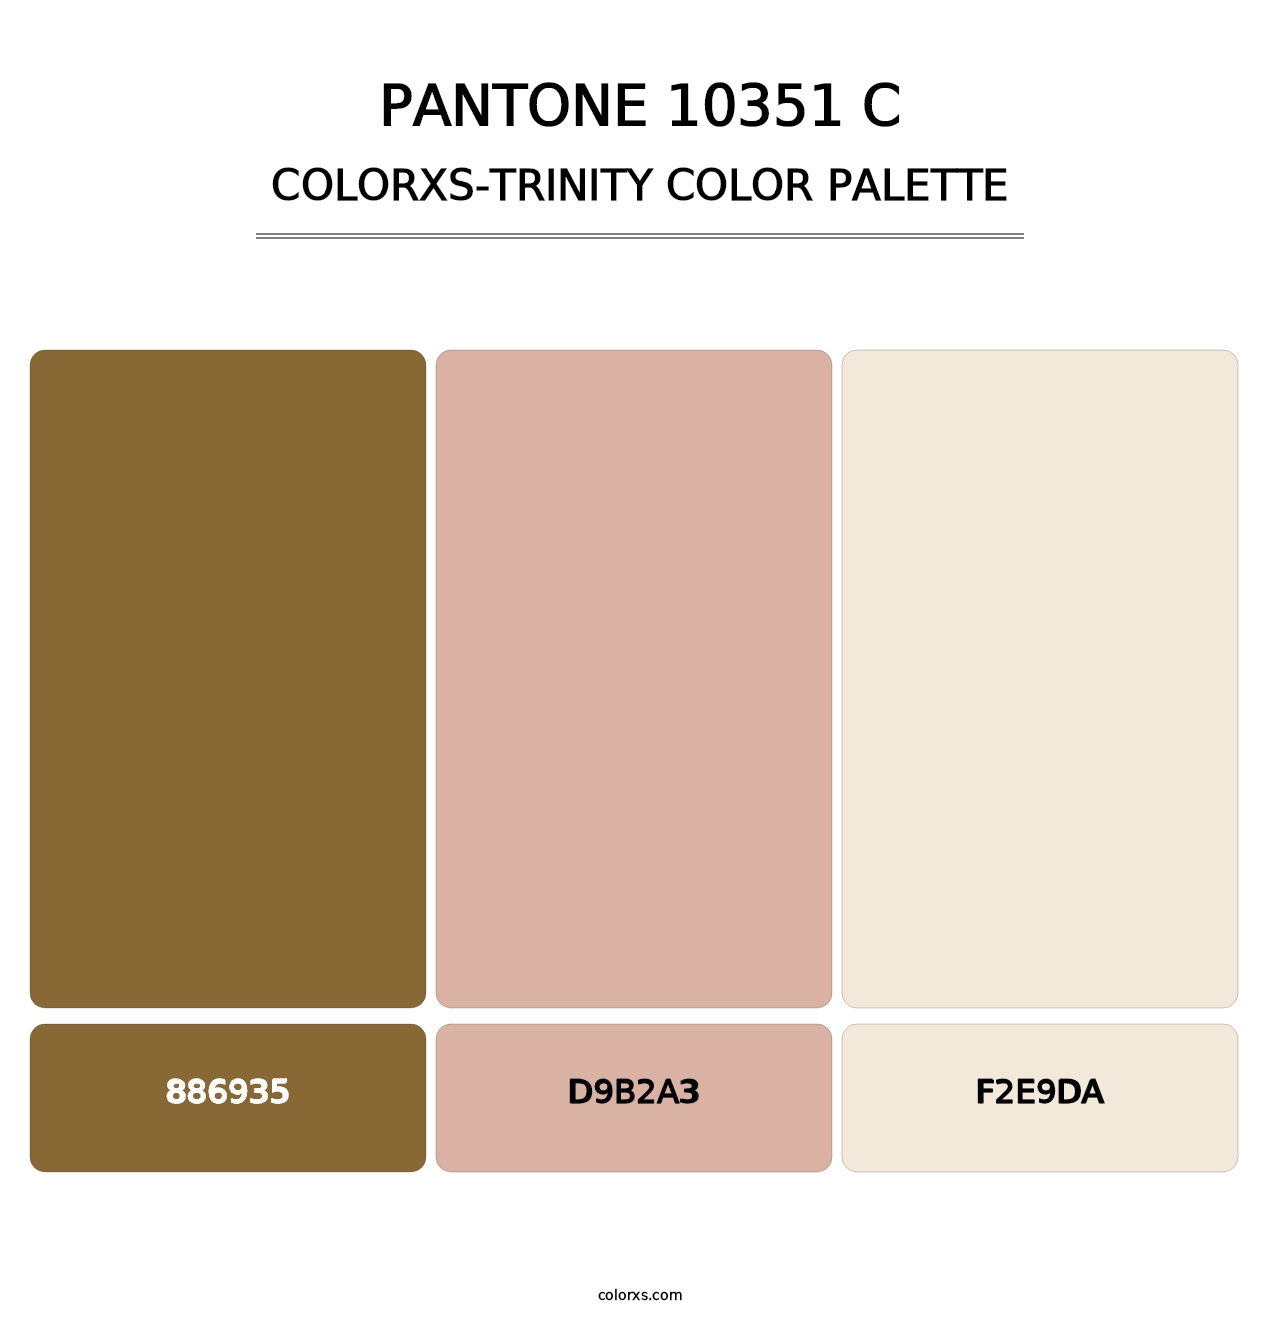 PANTONE 10351 C - Colorxs Trinity Palette